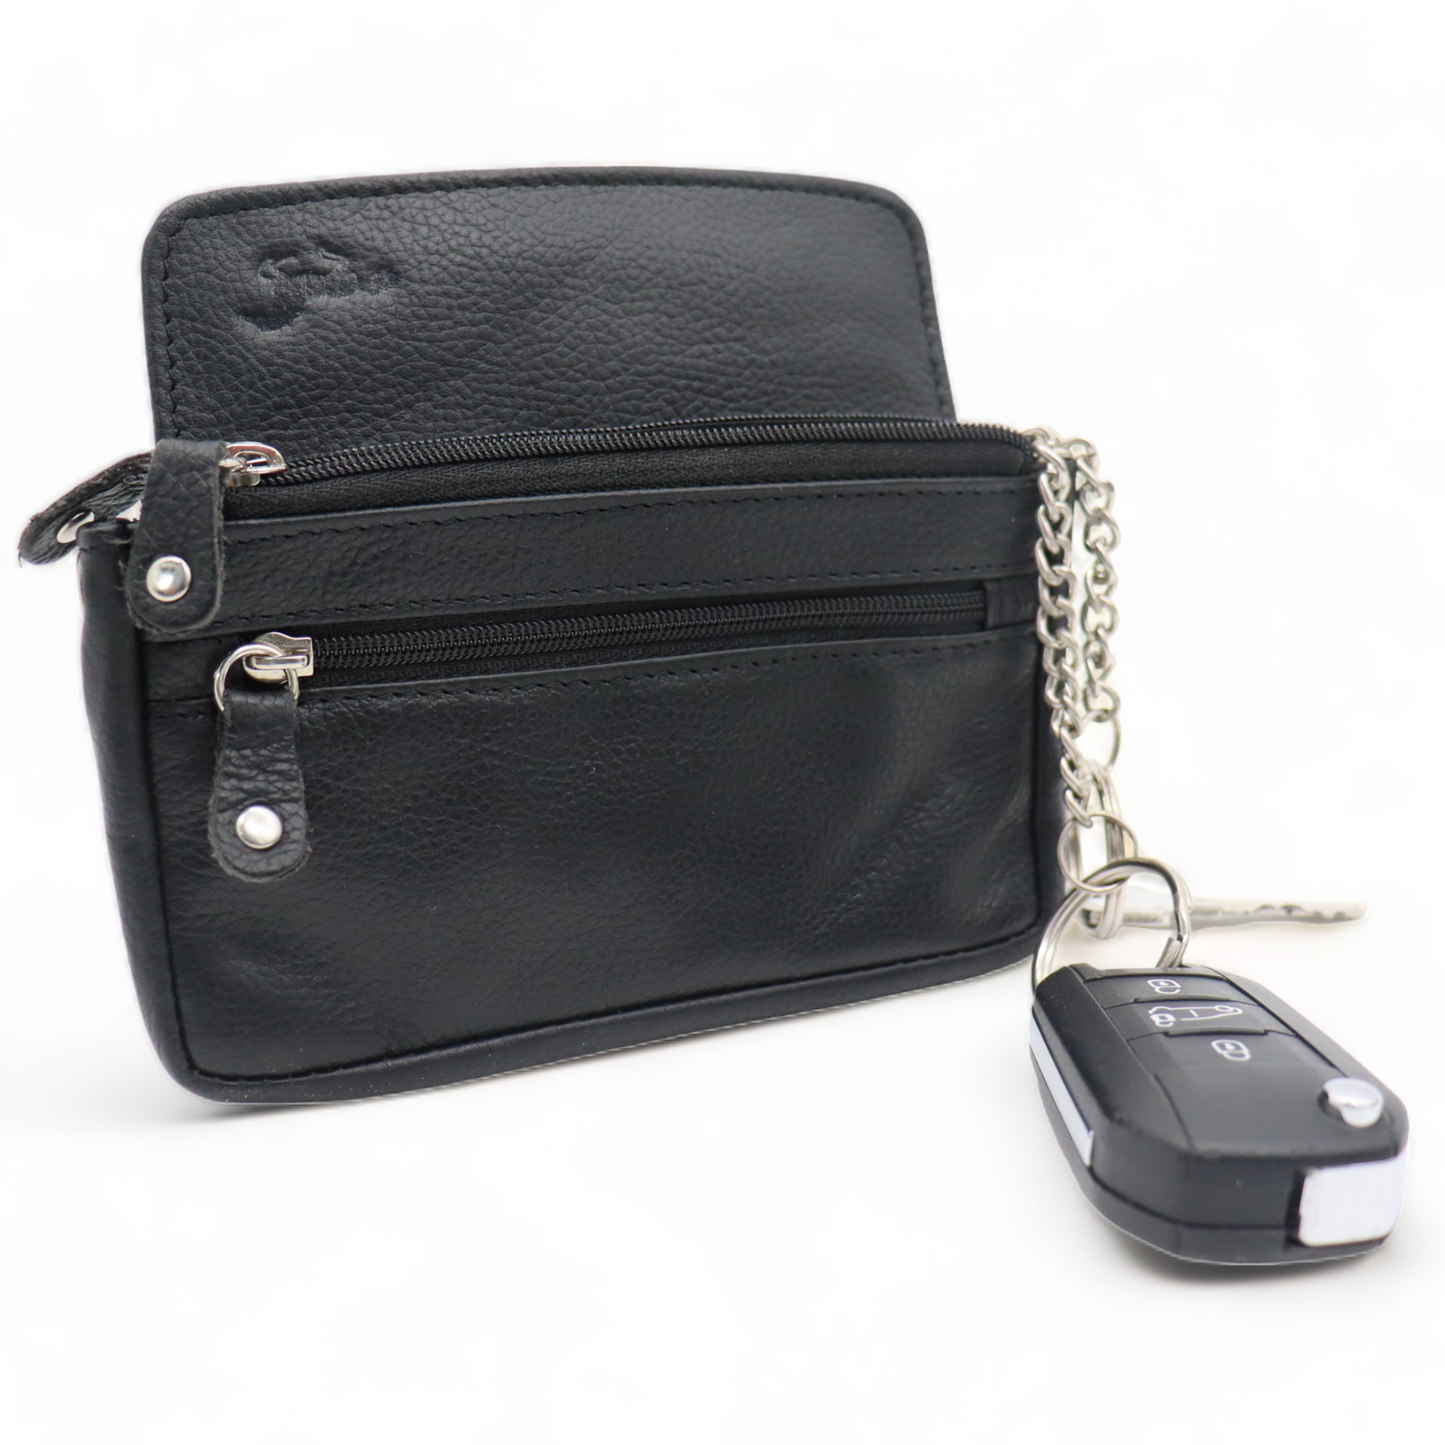 Key pouch XL - Key pouch XL - Key pouch - Genuine Leather - Key folder